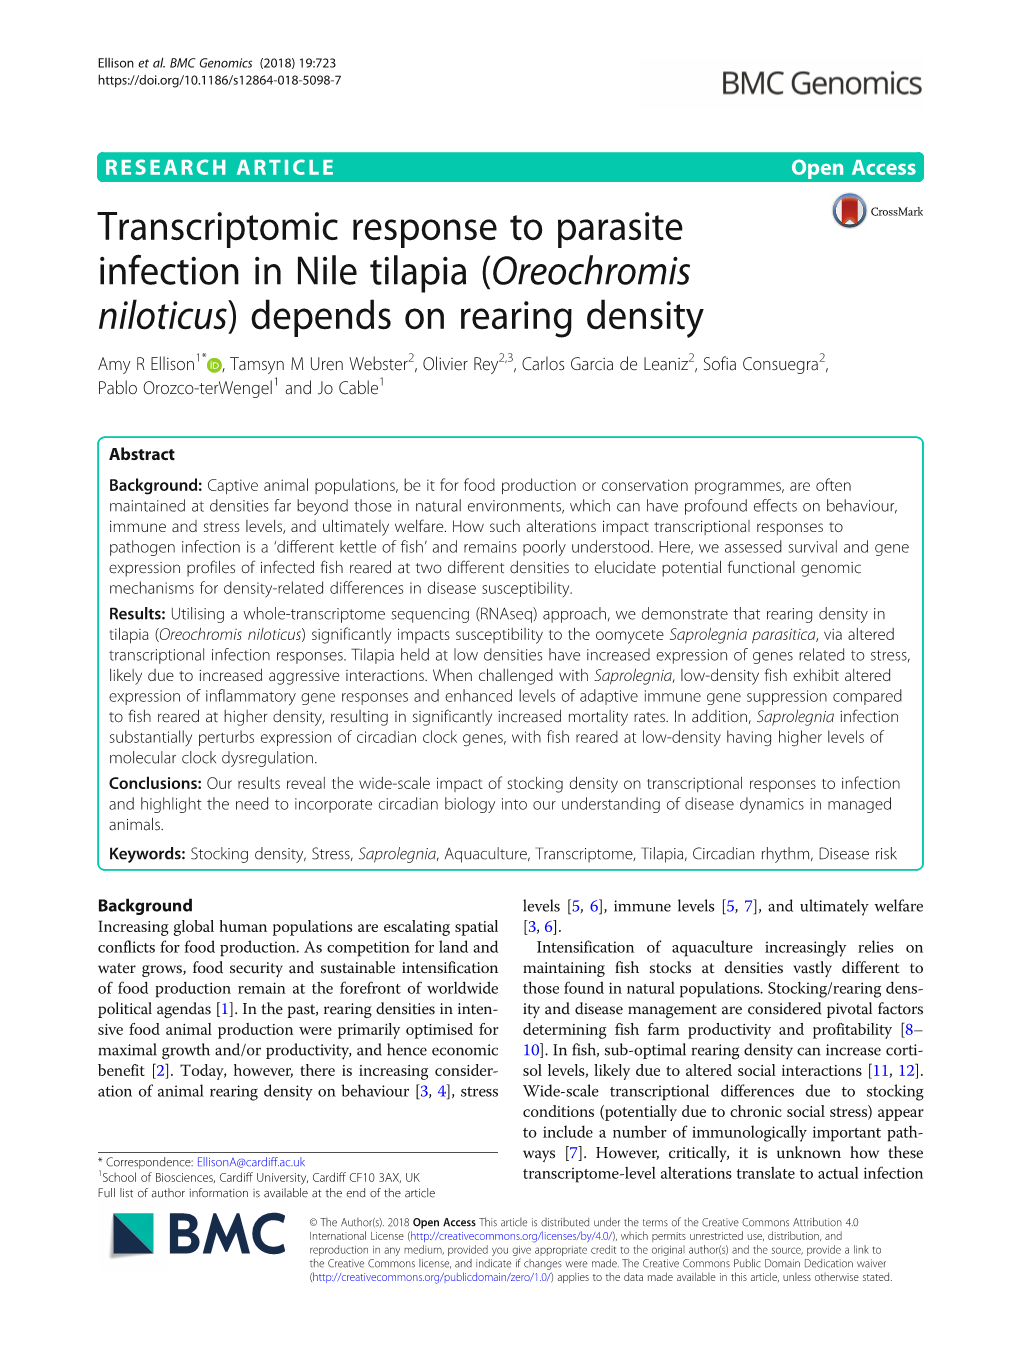 Transcriptomic Response to Parasite Infection in Nile Tilapia